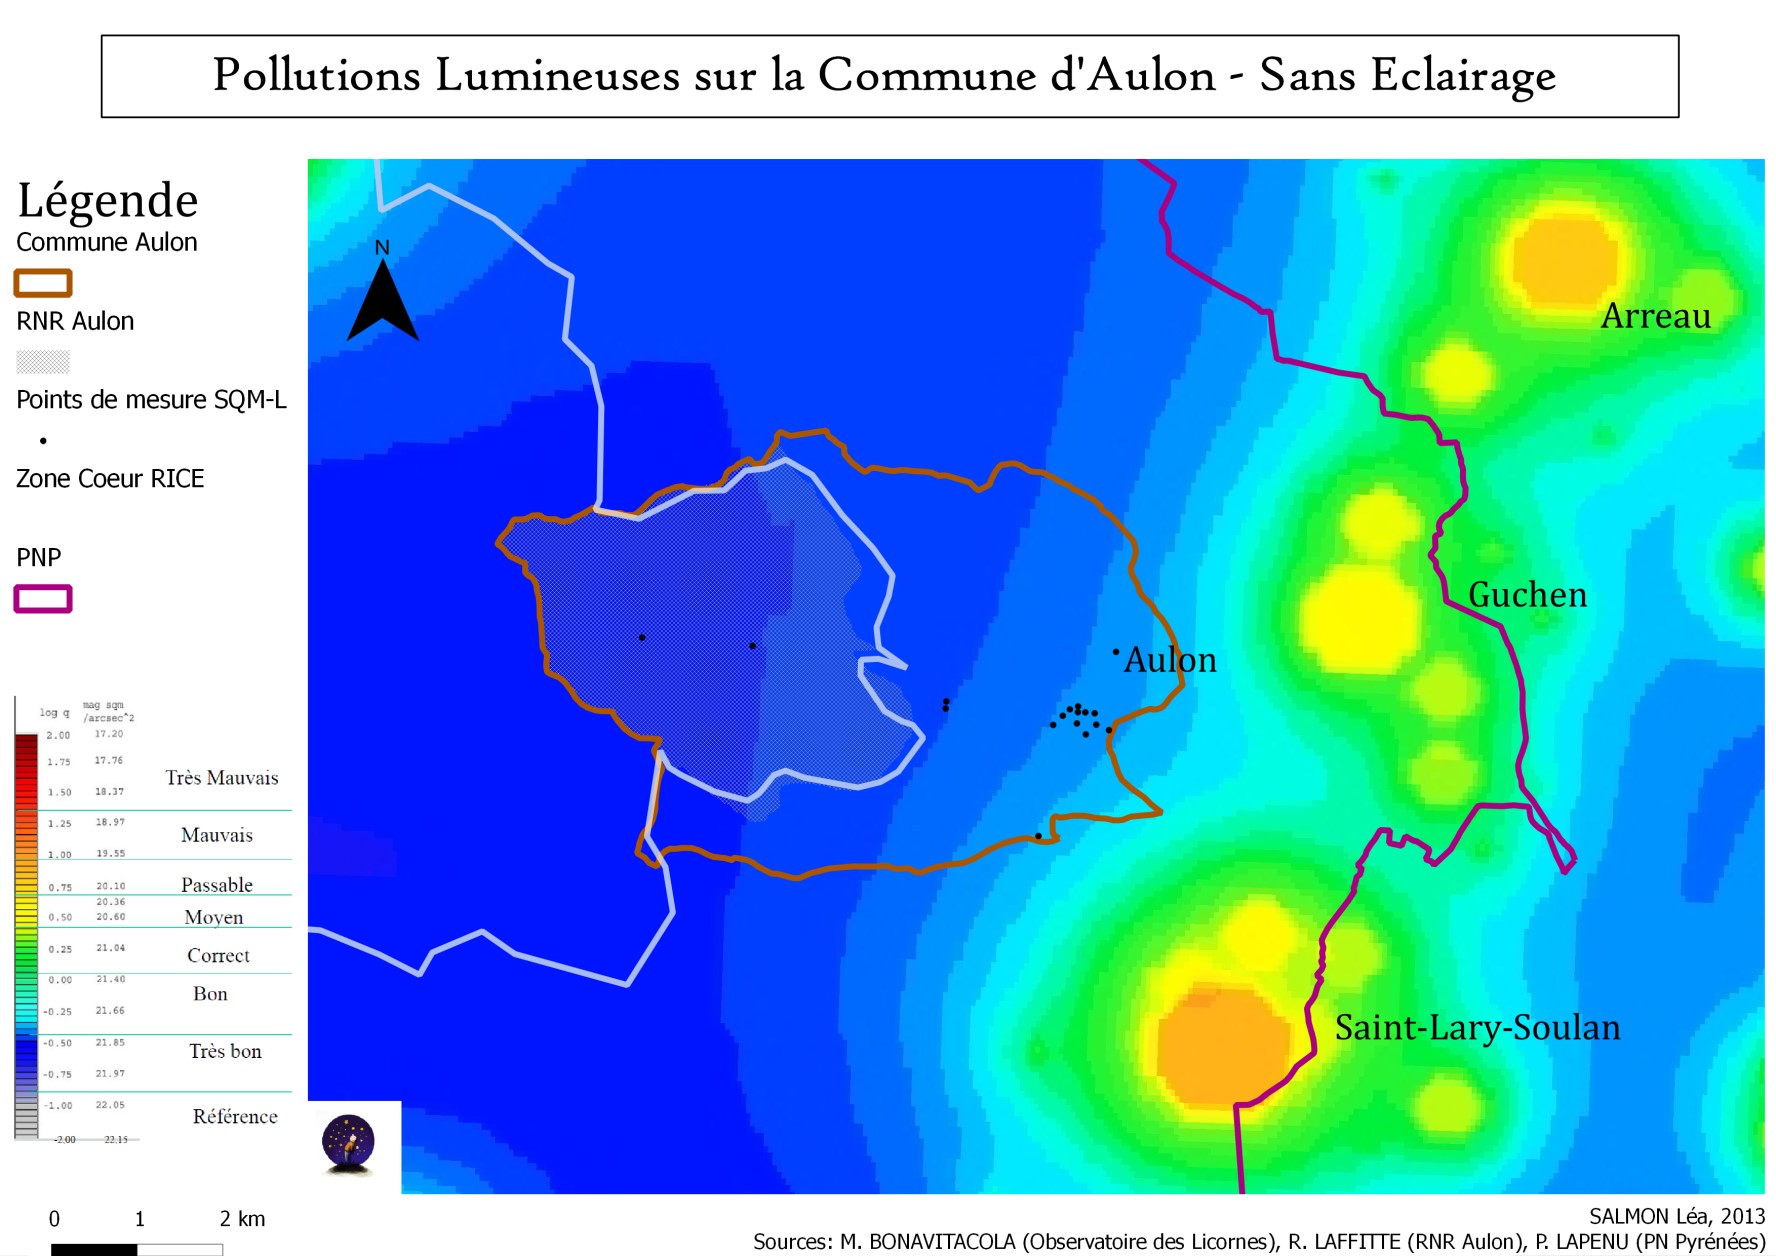 Pollutions Lumineuses commune d'Aulon